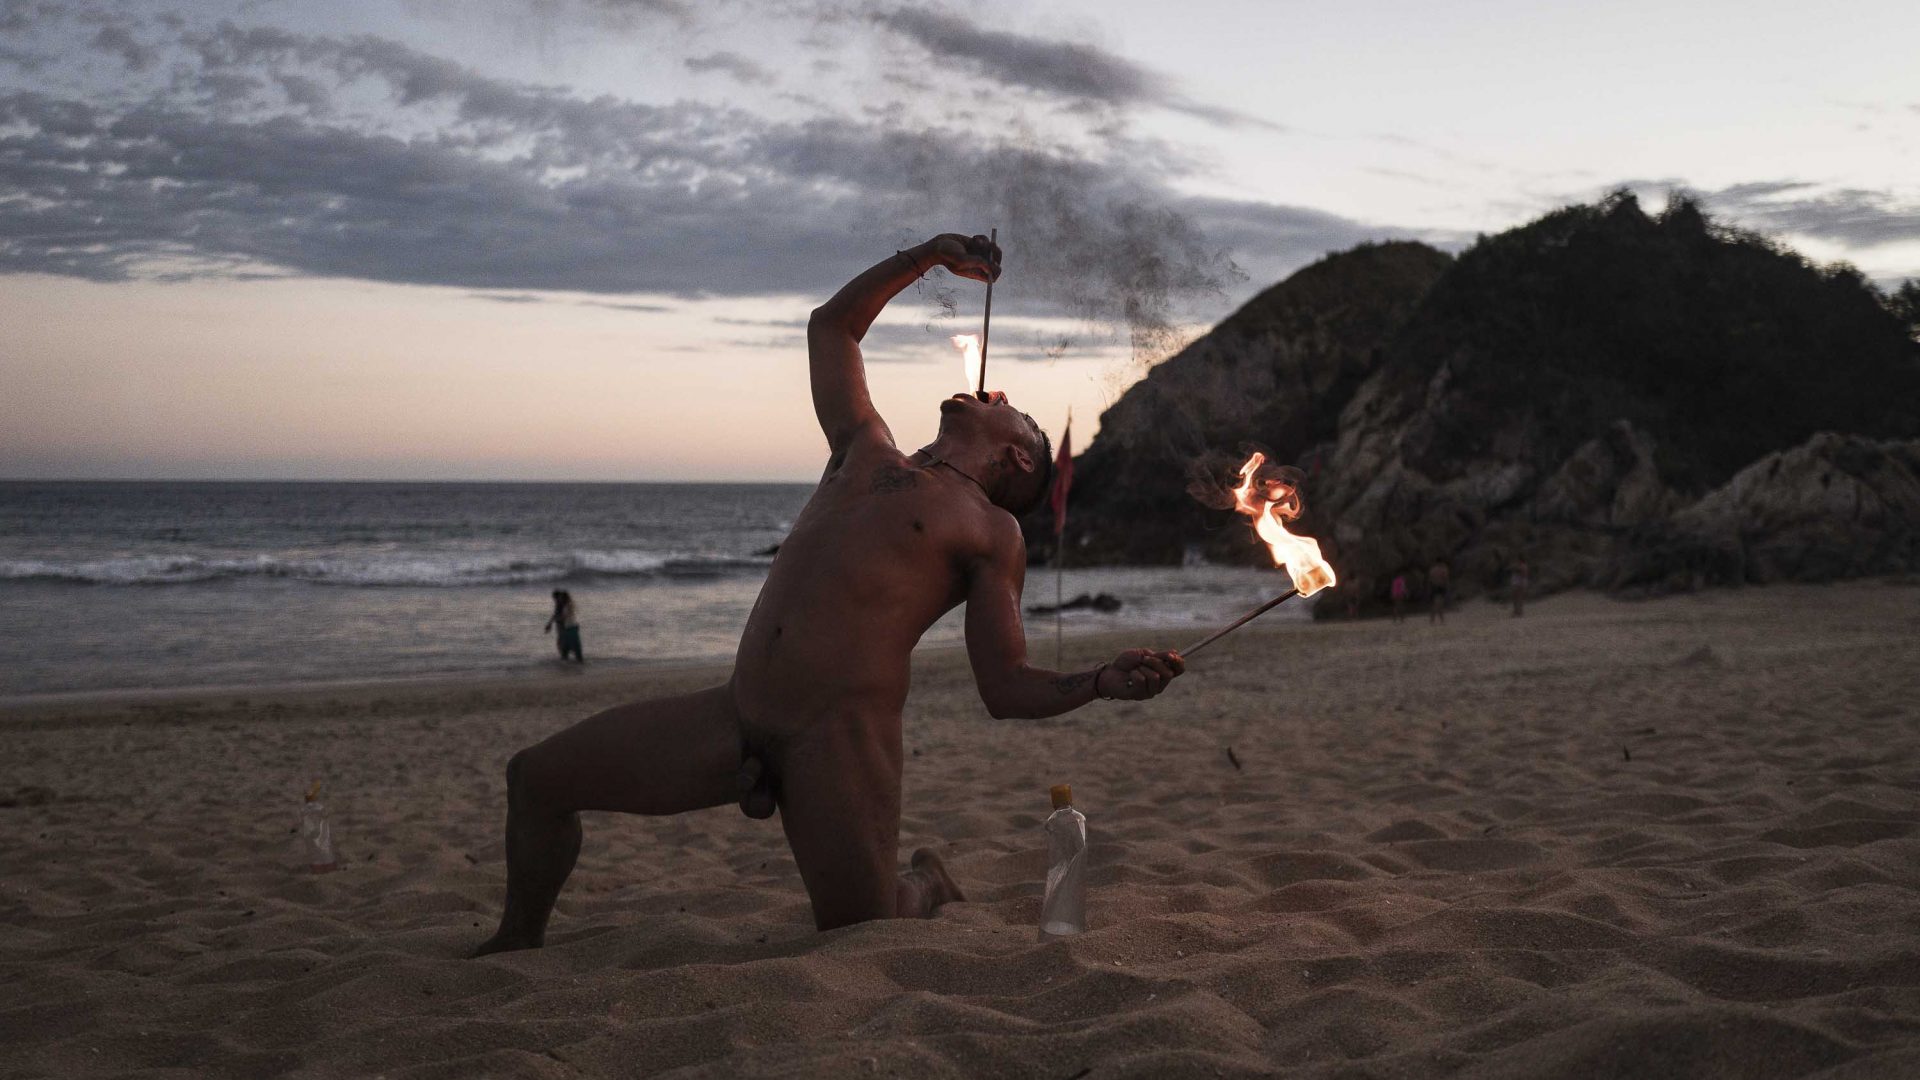 A naked man swallows fire on a beach.